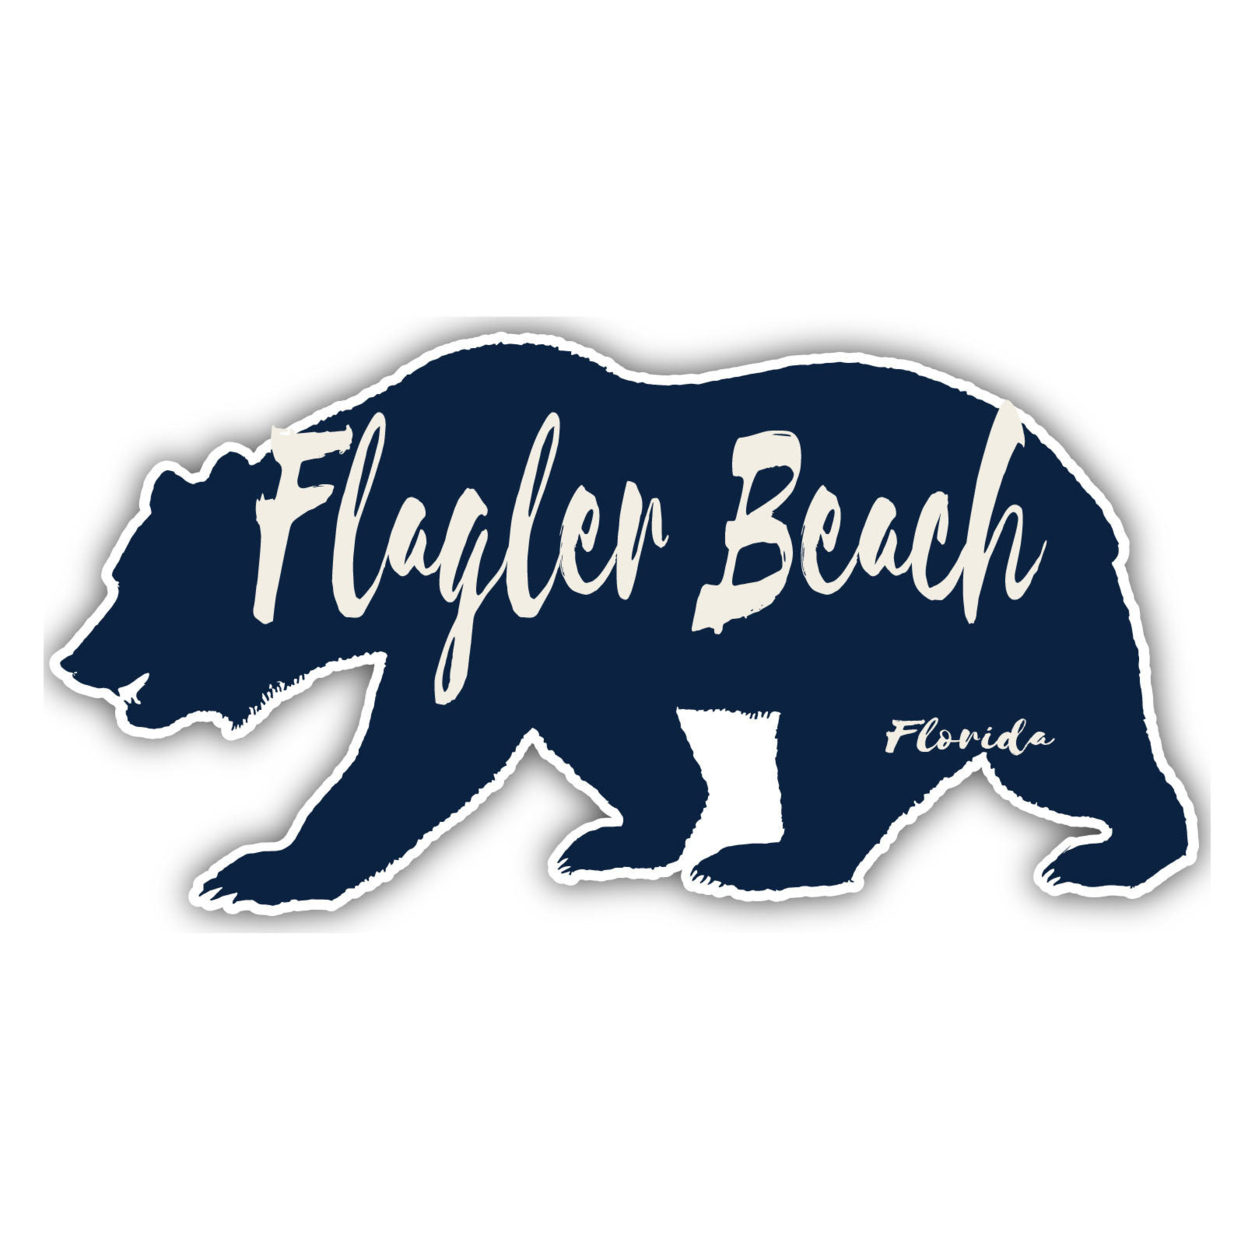 Flagler Beach Florida Souvenir Decorative Stickers (Choose Theme And Size) - Single Unit, 12-Inch, Bear